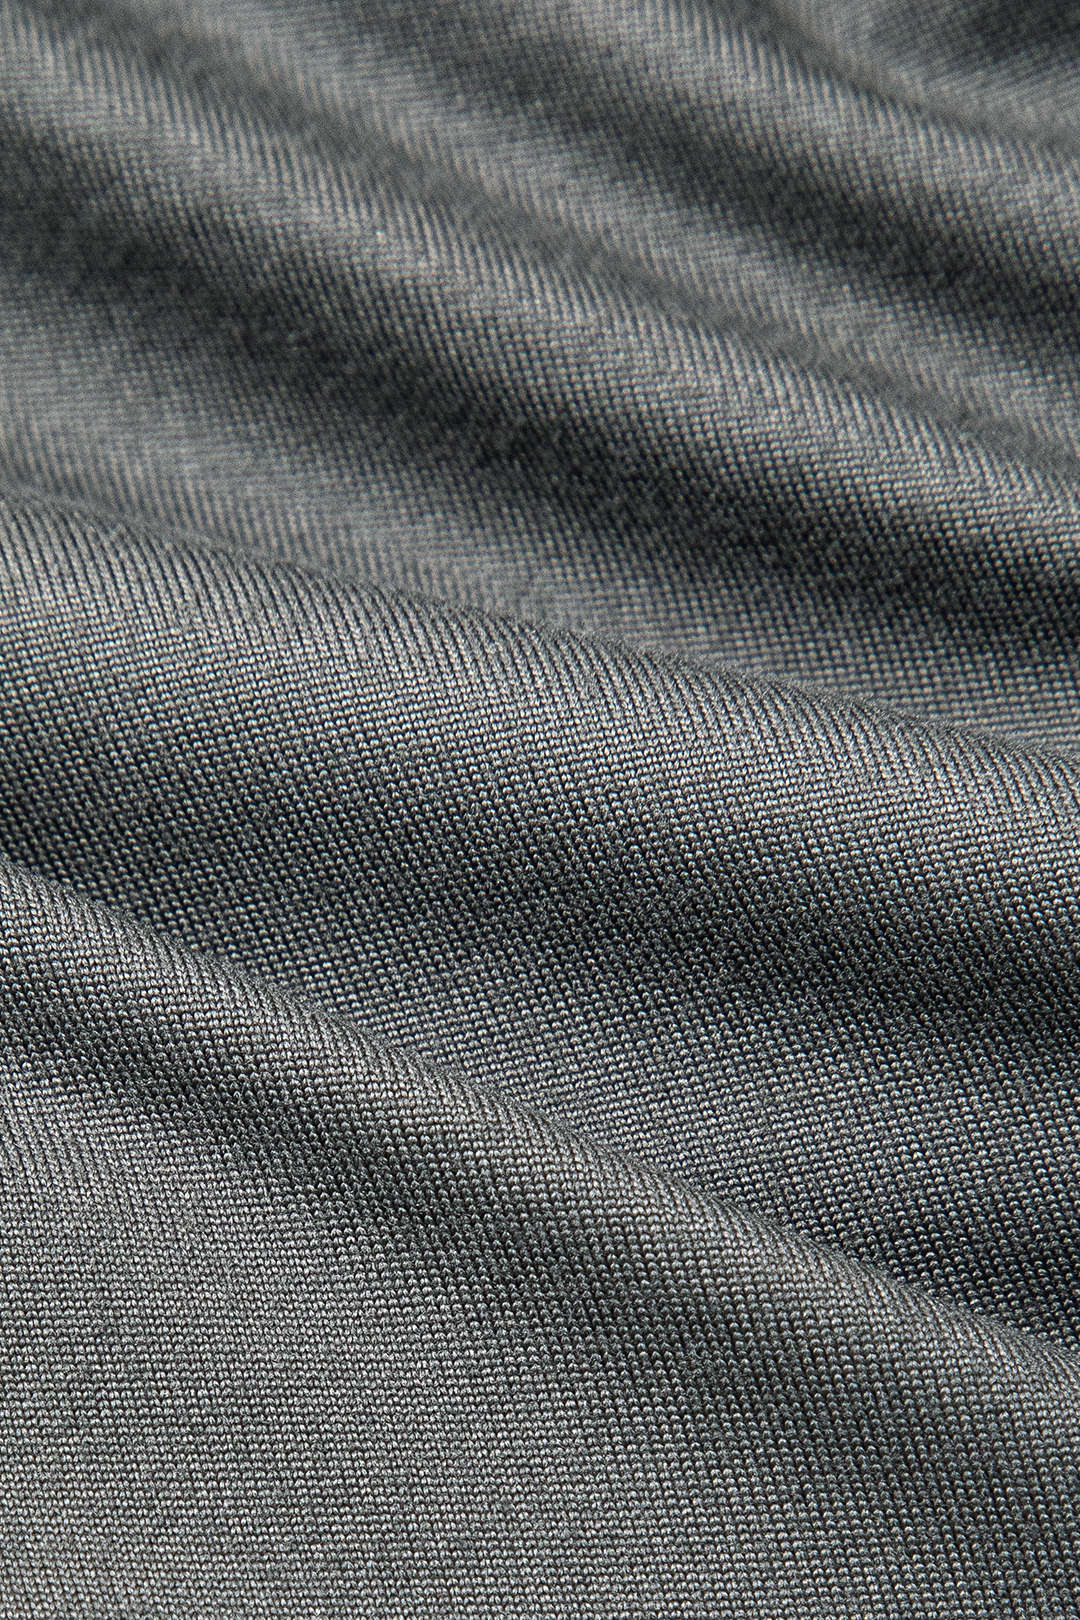 V-neck Seam Detail Long Sleeve Crop Top